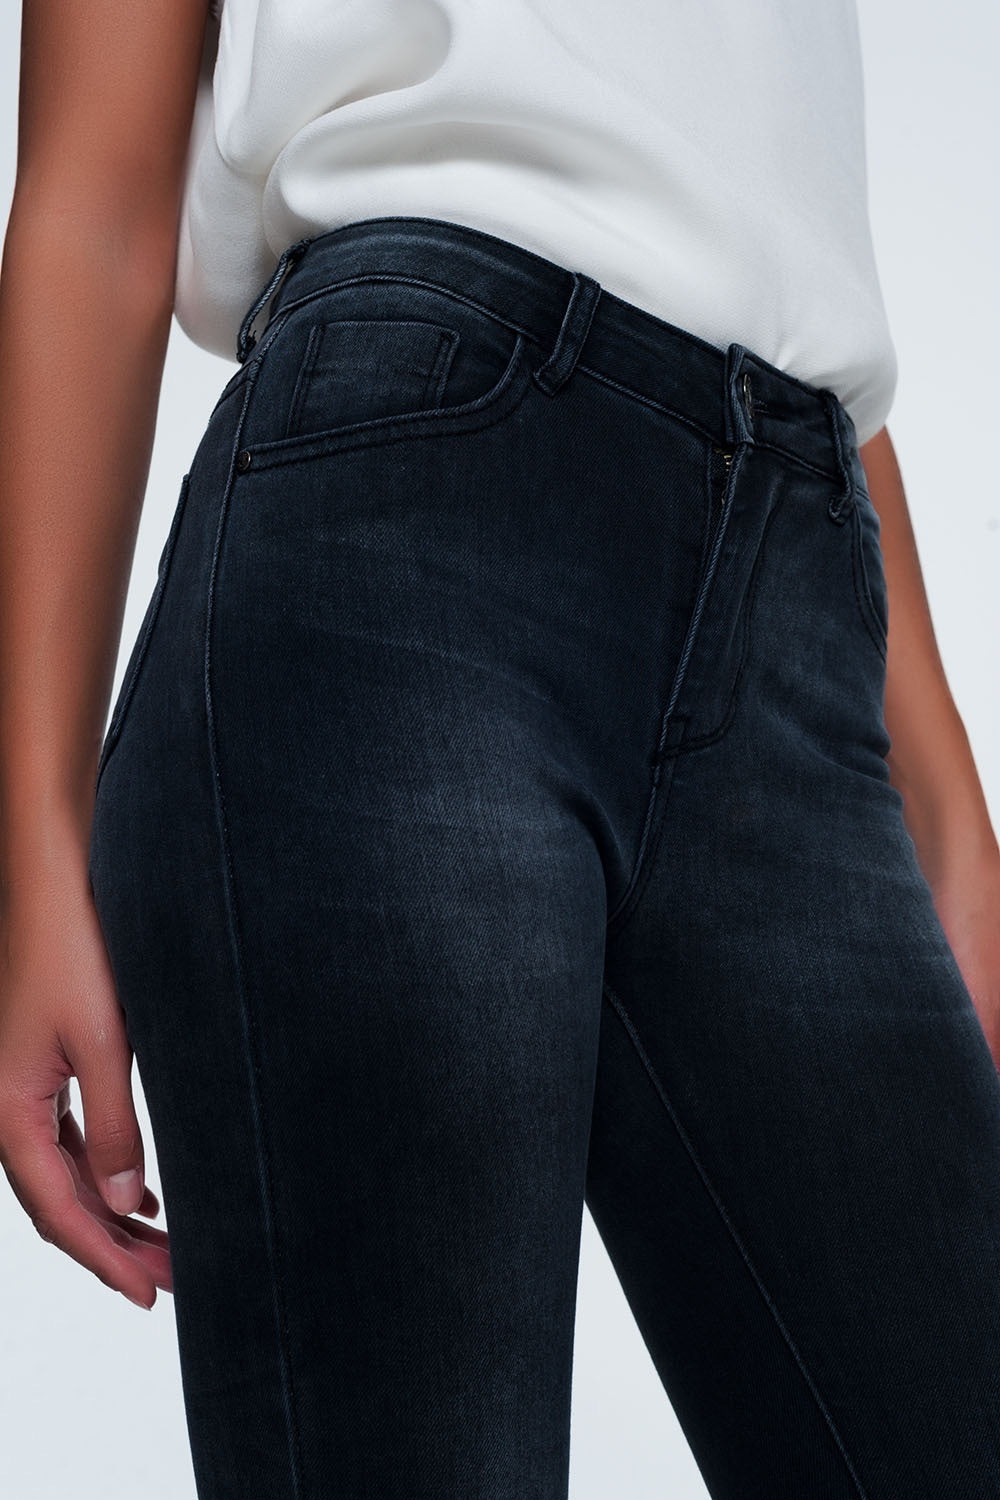 Jeans gris oscuros ajustados desgastados – BellayVale